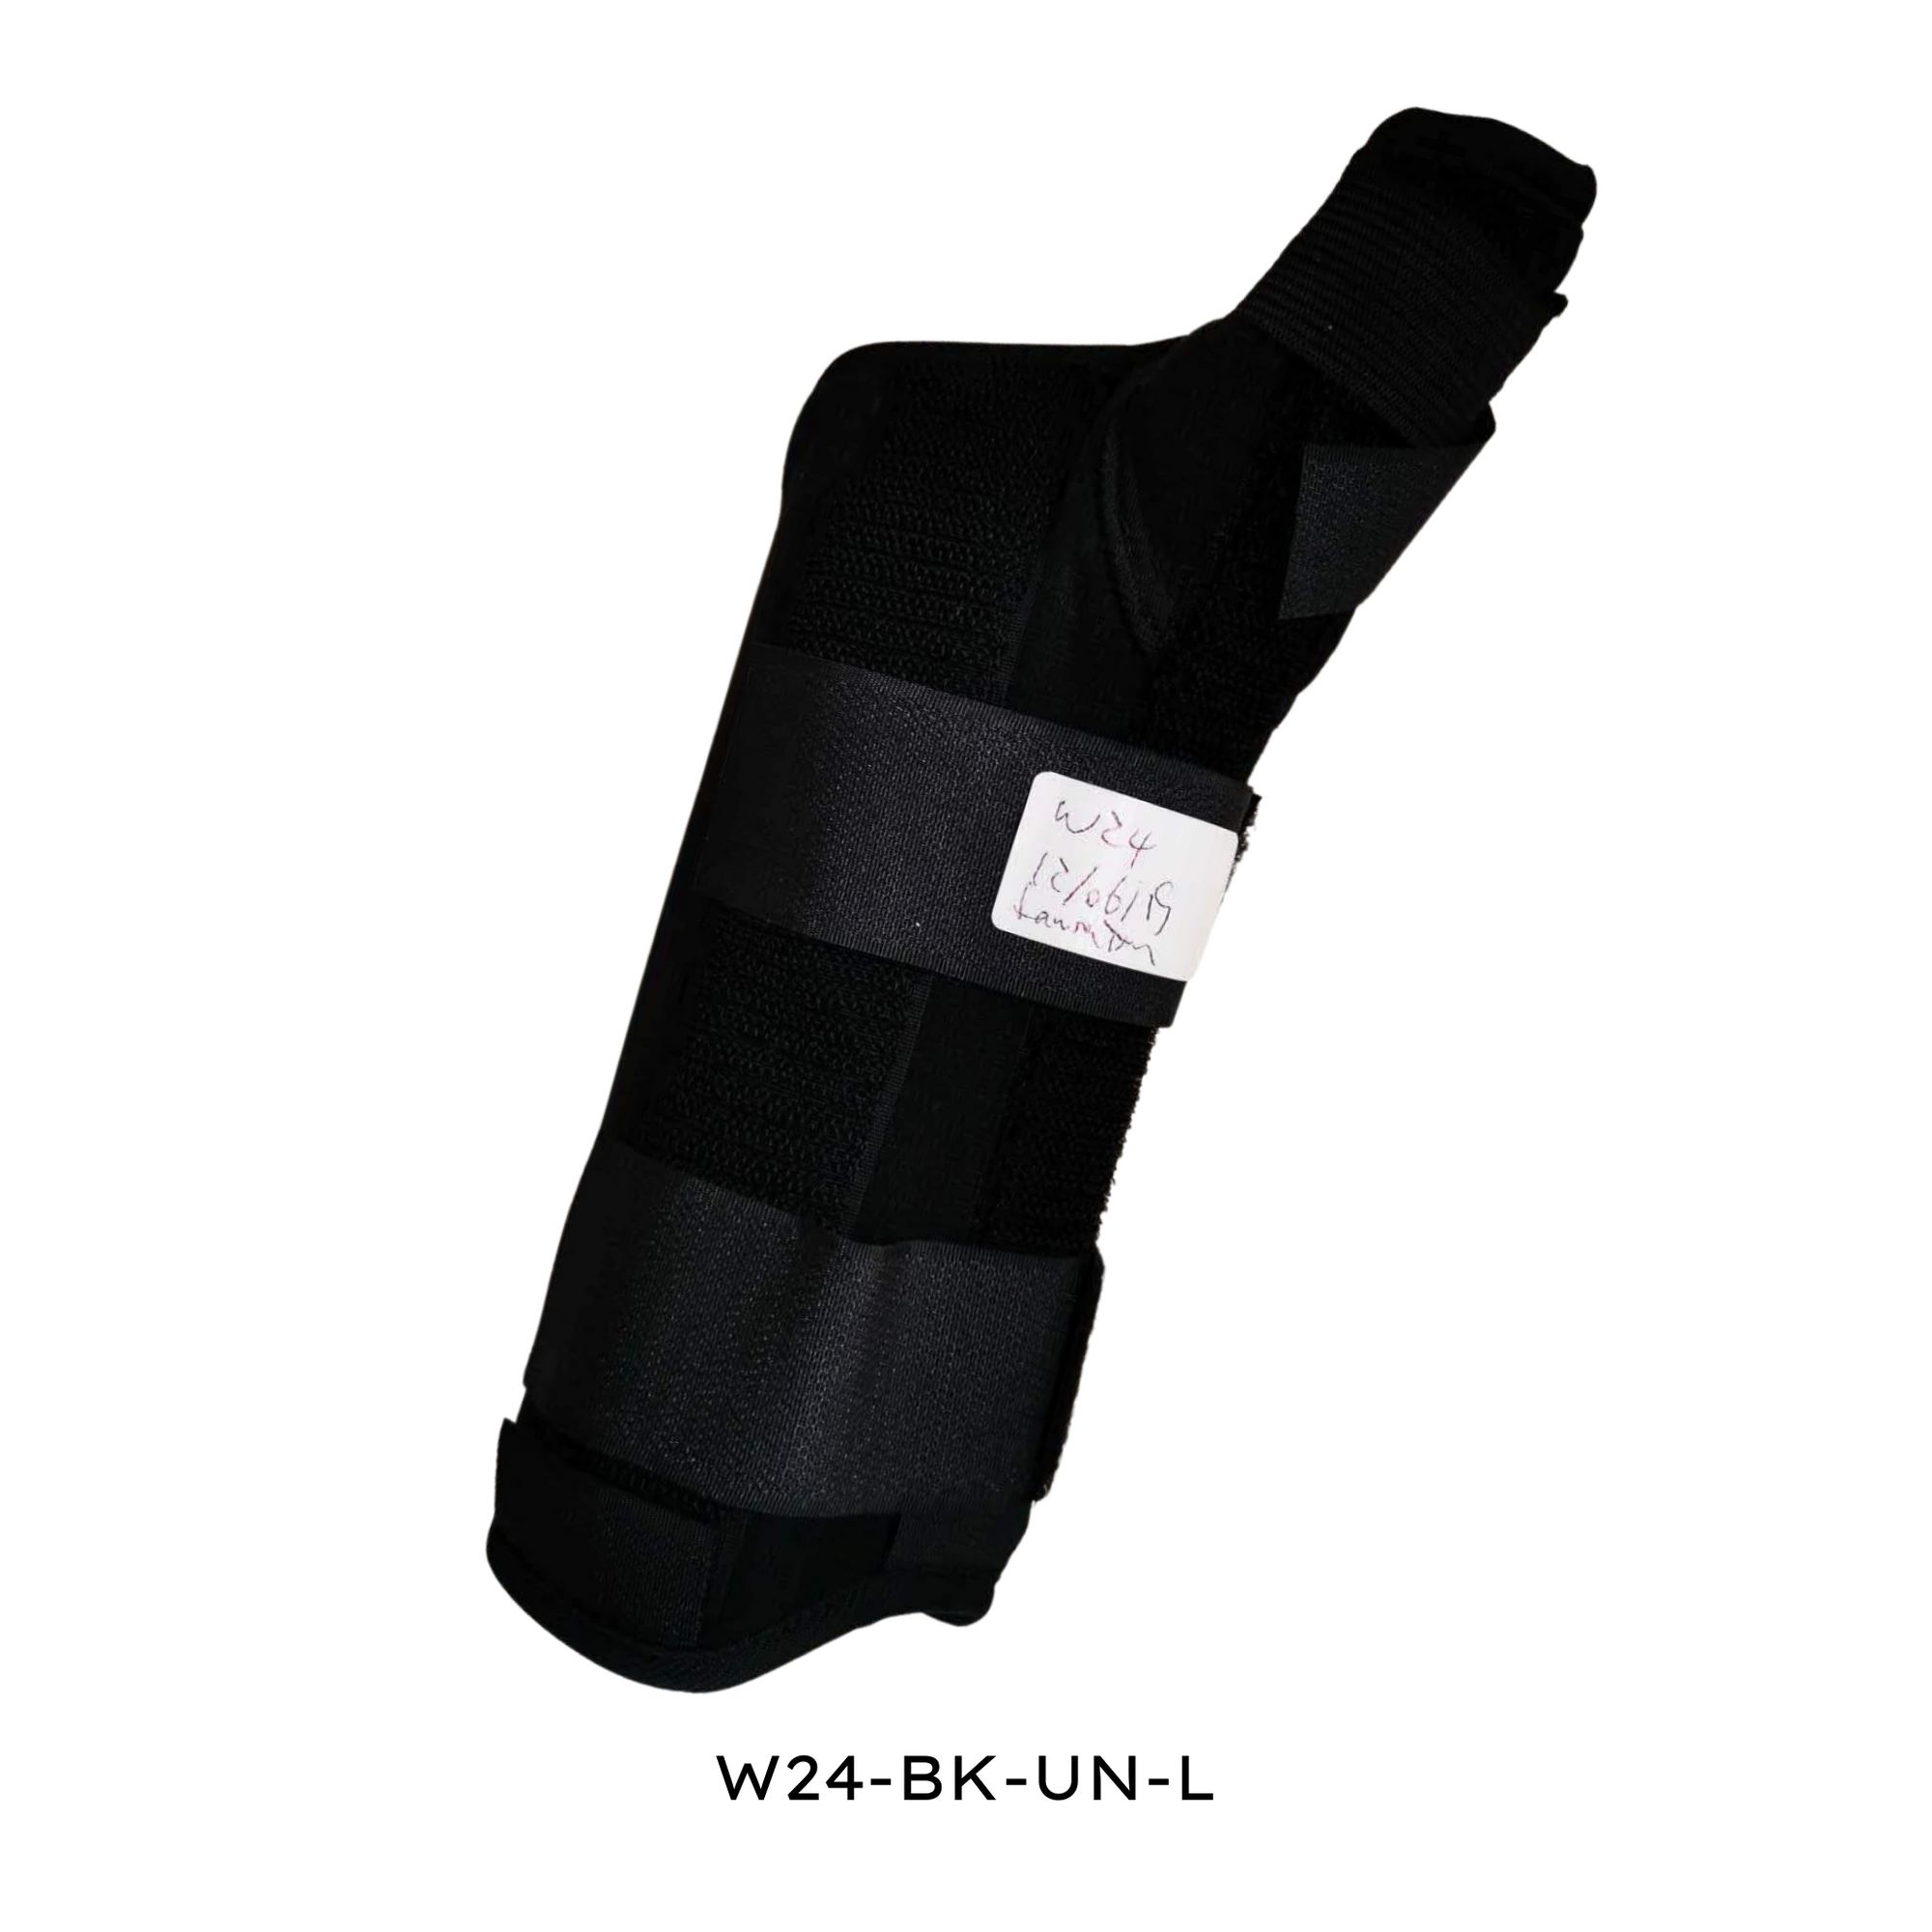 SPINEMATRIX Wrist Brace with Thumb Splint - UNIVERSAL, LEFT